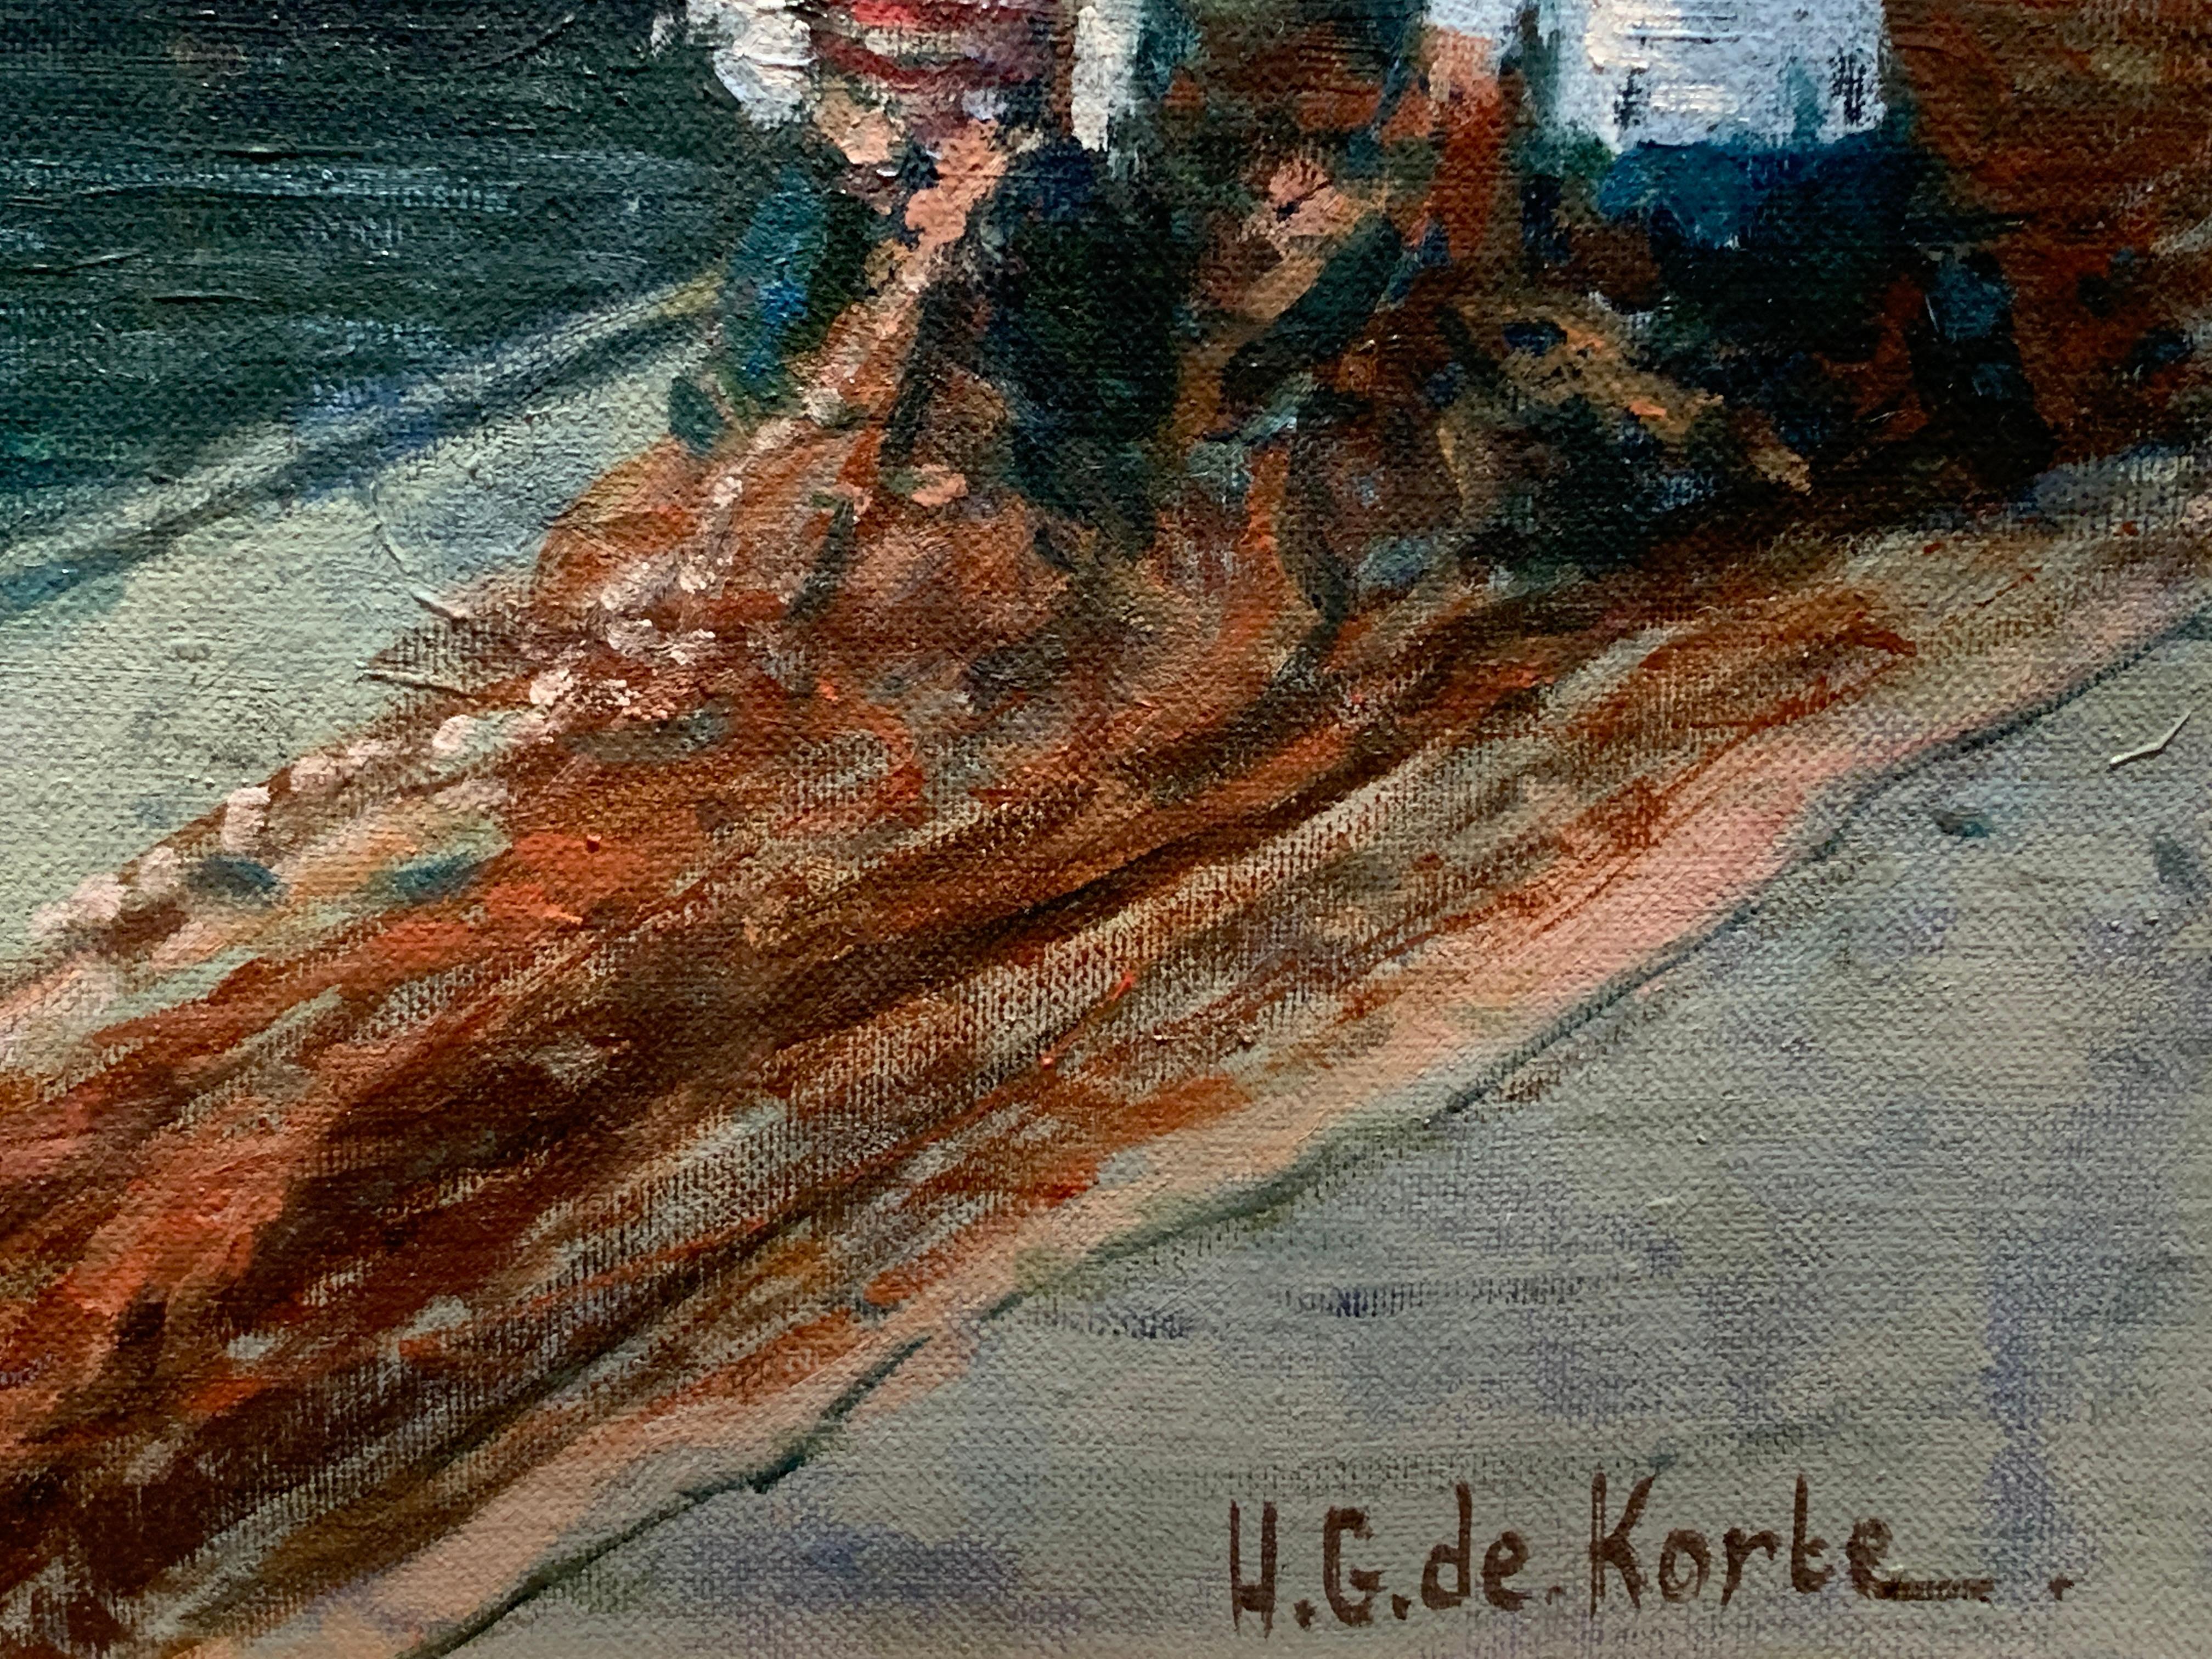 „Repairing the Nets“, Henni de Korte, 19x23 Zoll, Öl auf Leinwand, Impressionismus (Grau), Figurative Painting, von H. G. de Korte